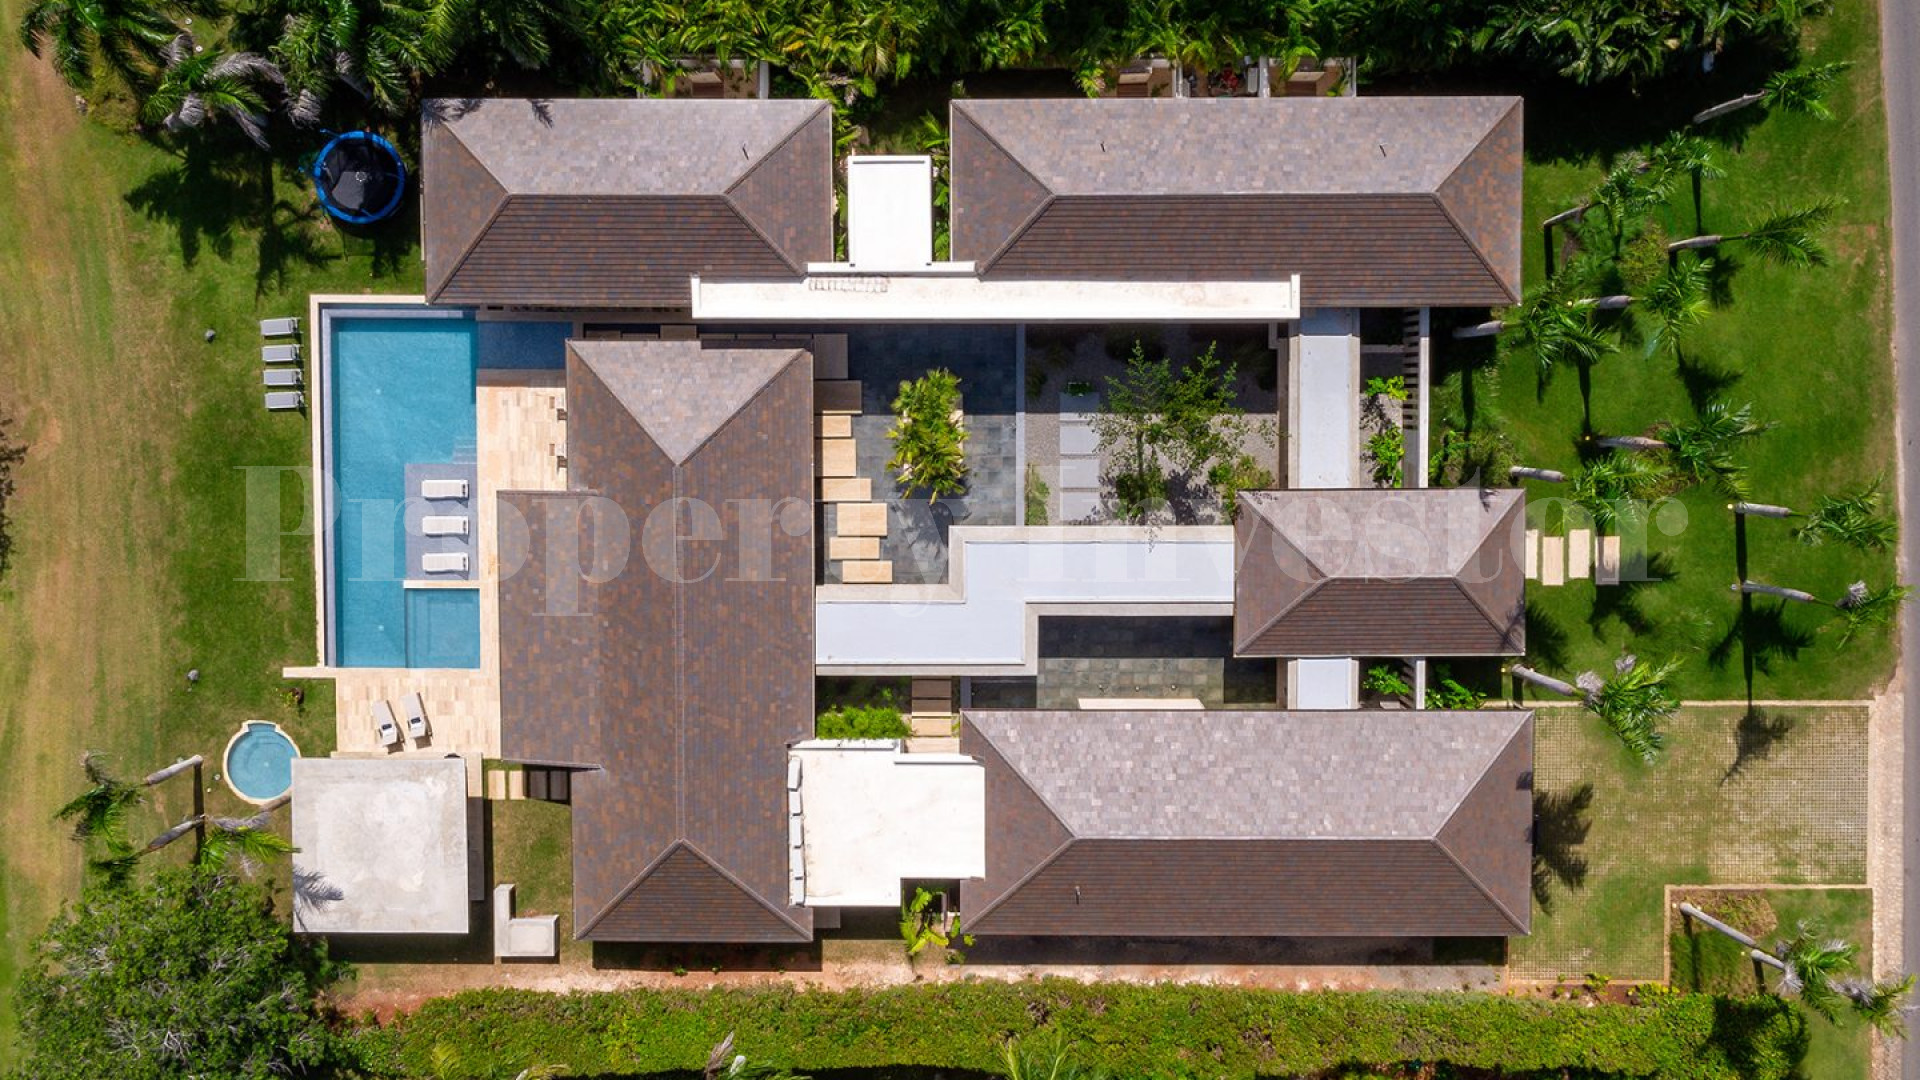 Exquisite 5 Bedroom Villa with Stunning Golf & Ocean Views for Sale in La Romana, Dominican Republic